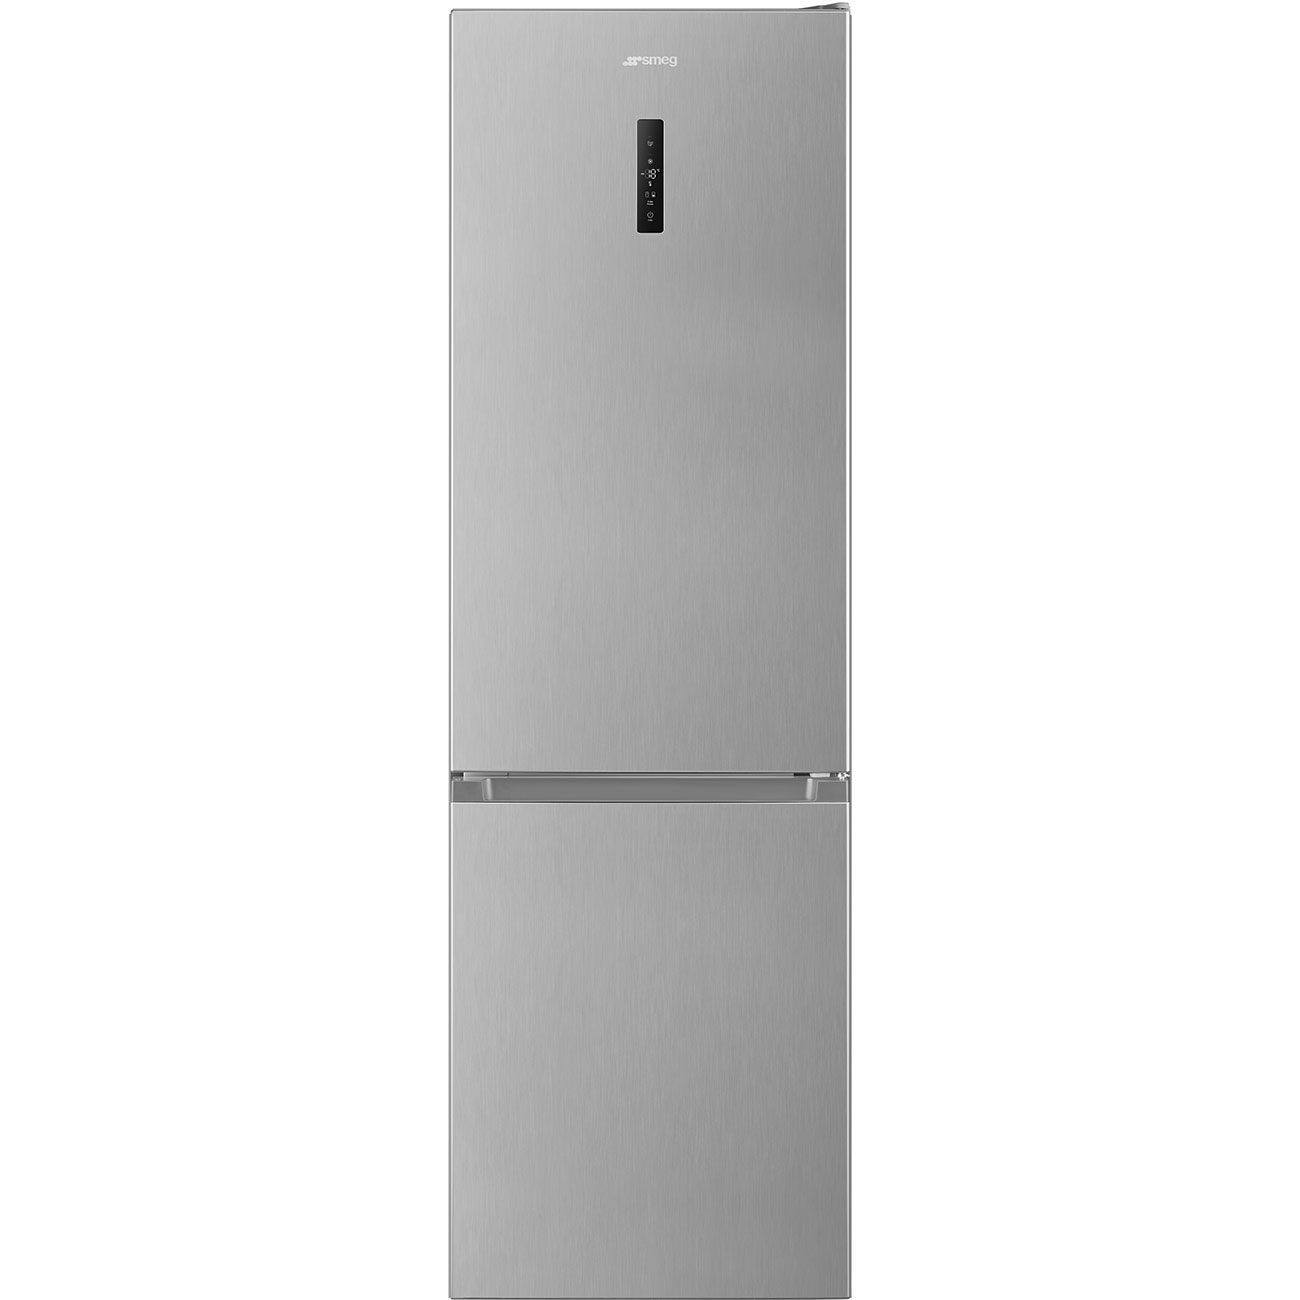 Bottom Mount Free standing refrigerator - Smeg_1